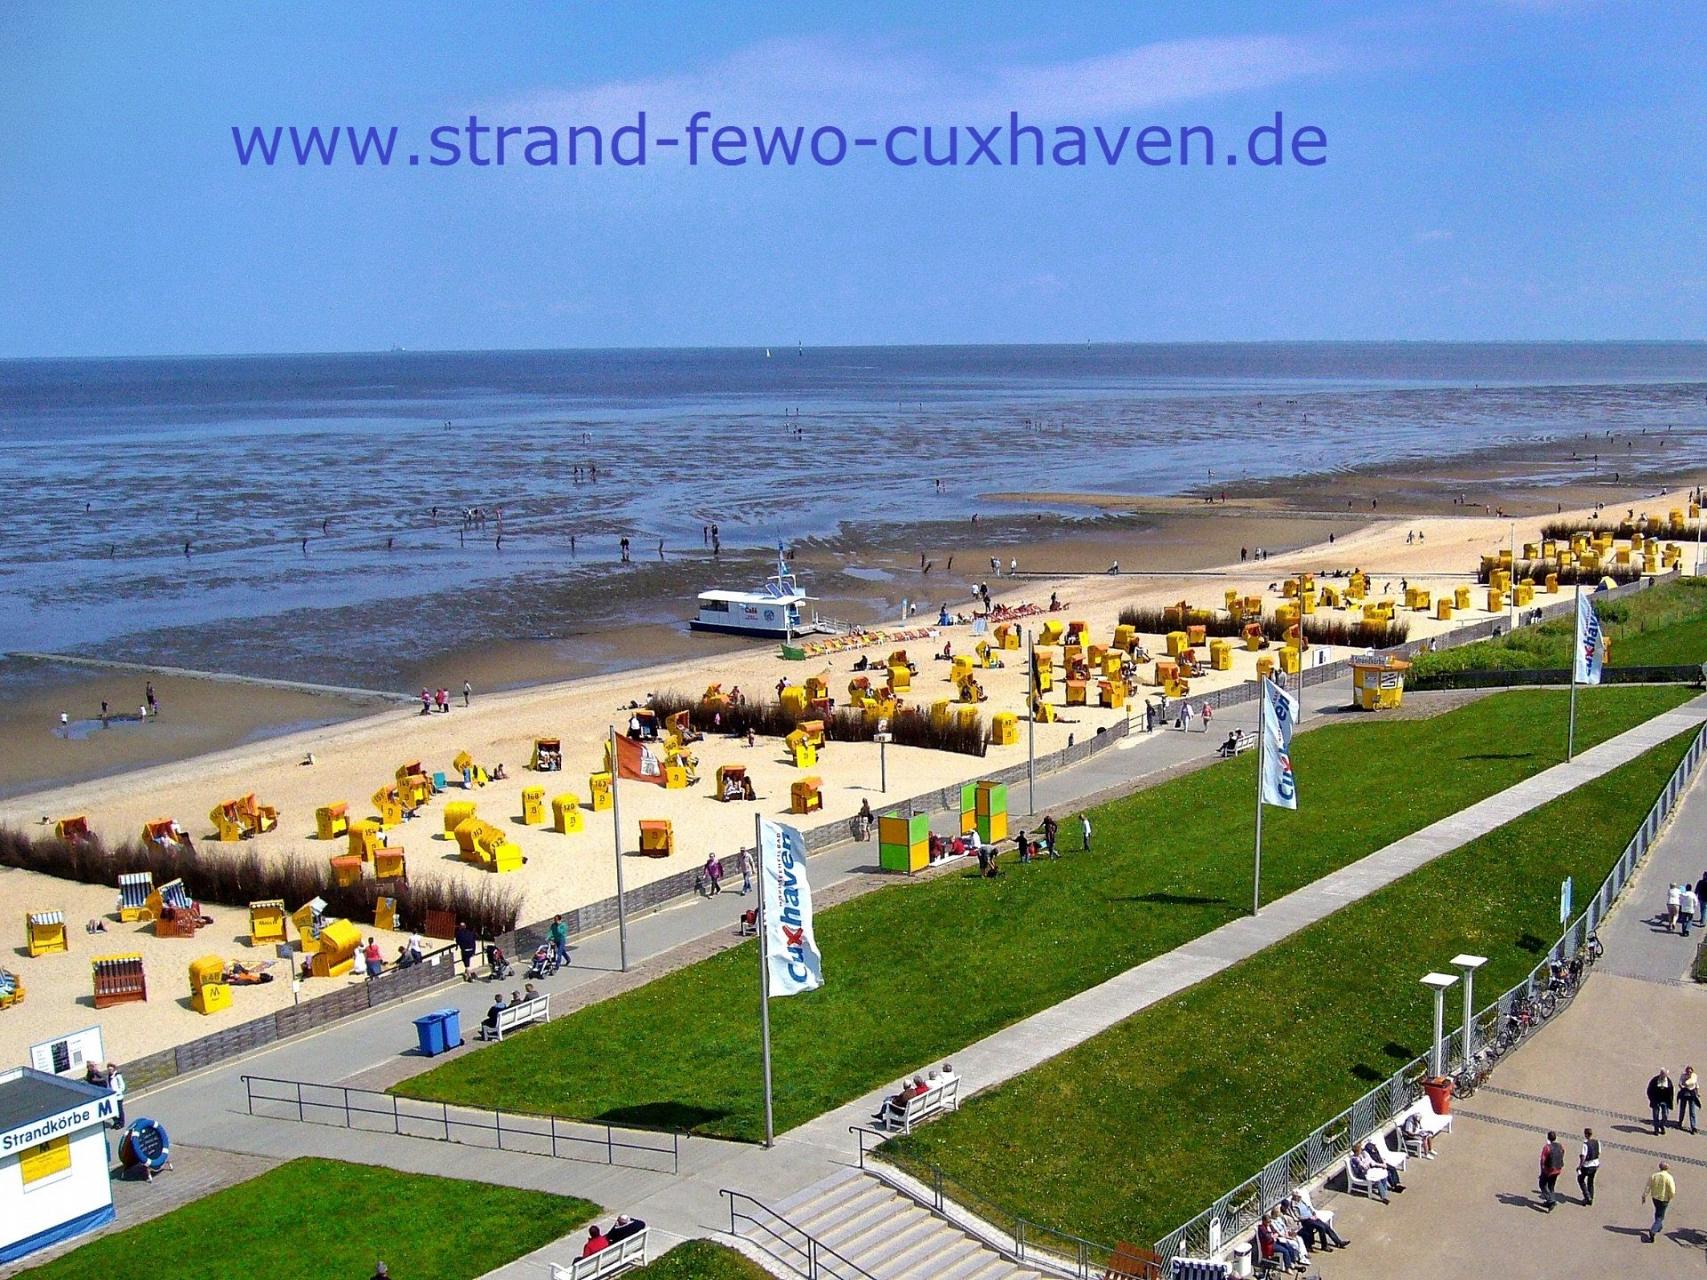 Strand-FeWo-Cuxhaven.de - Header